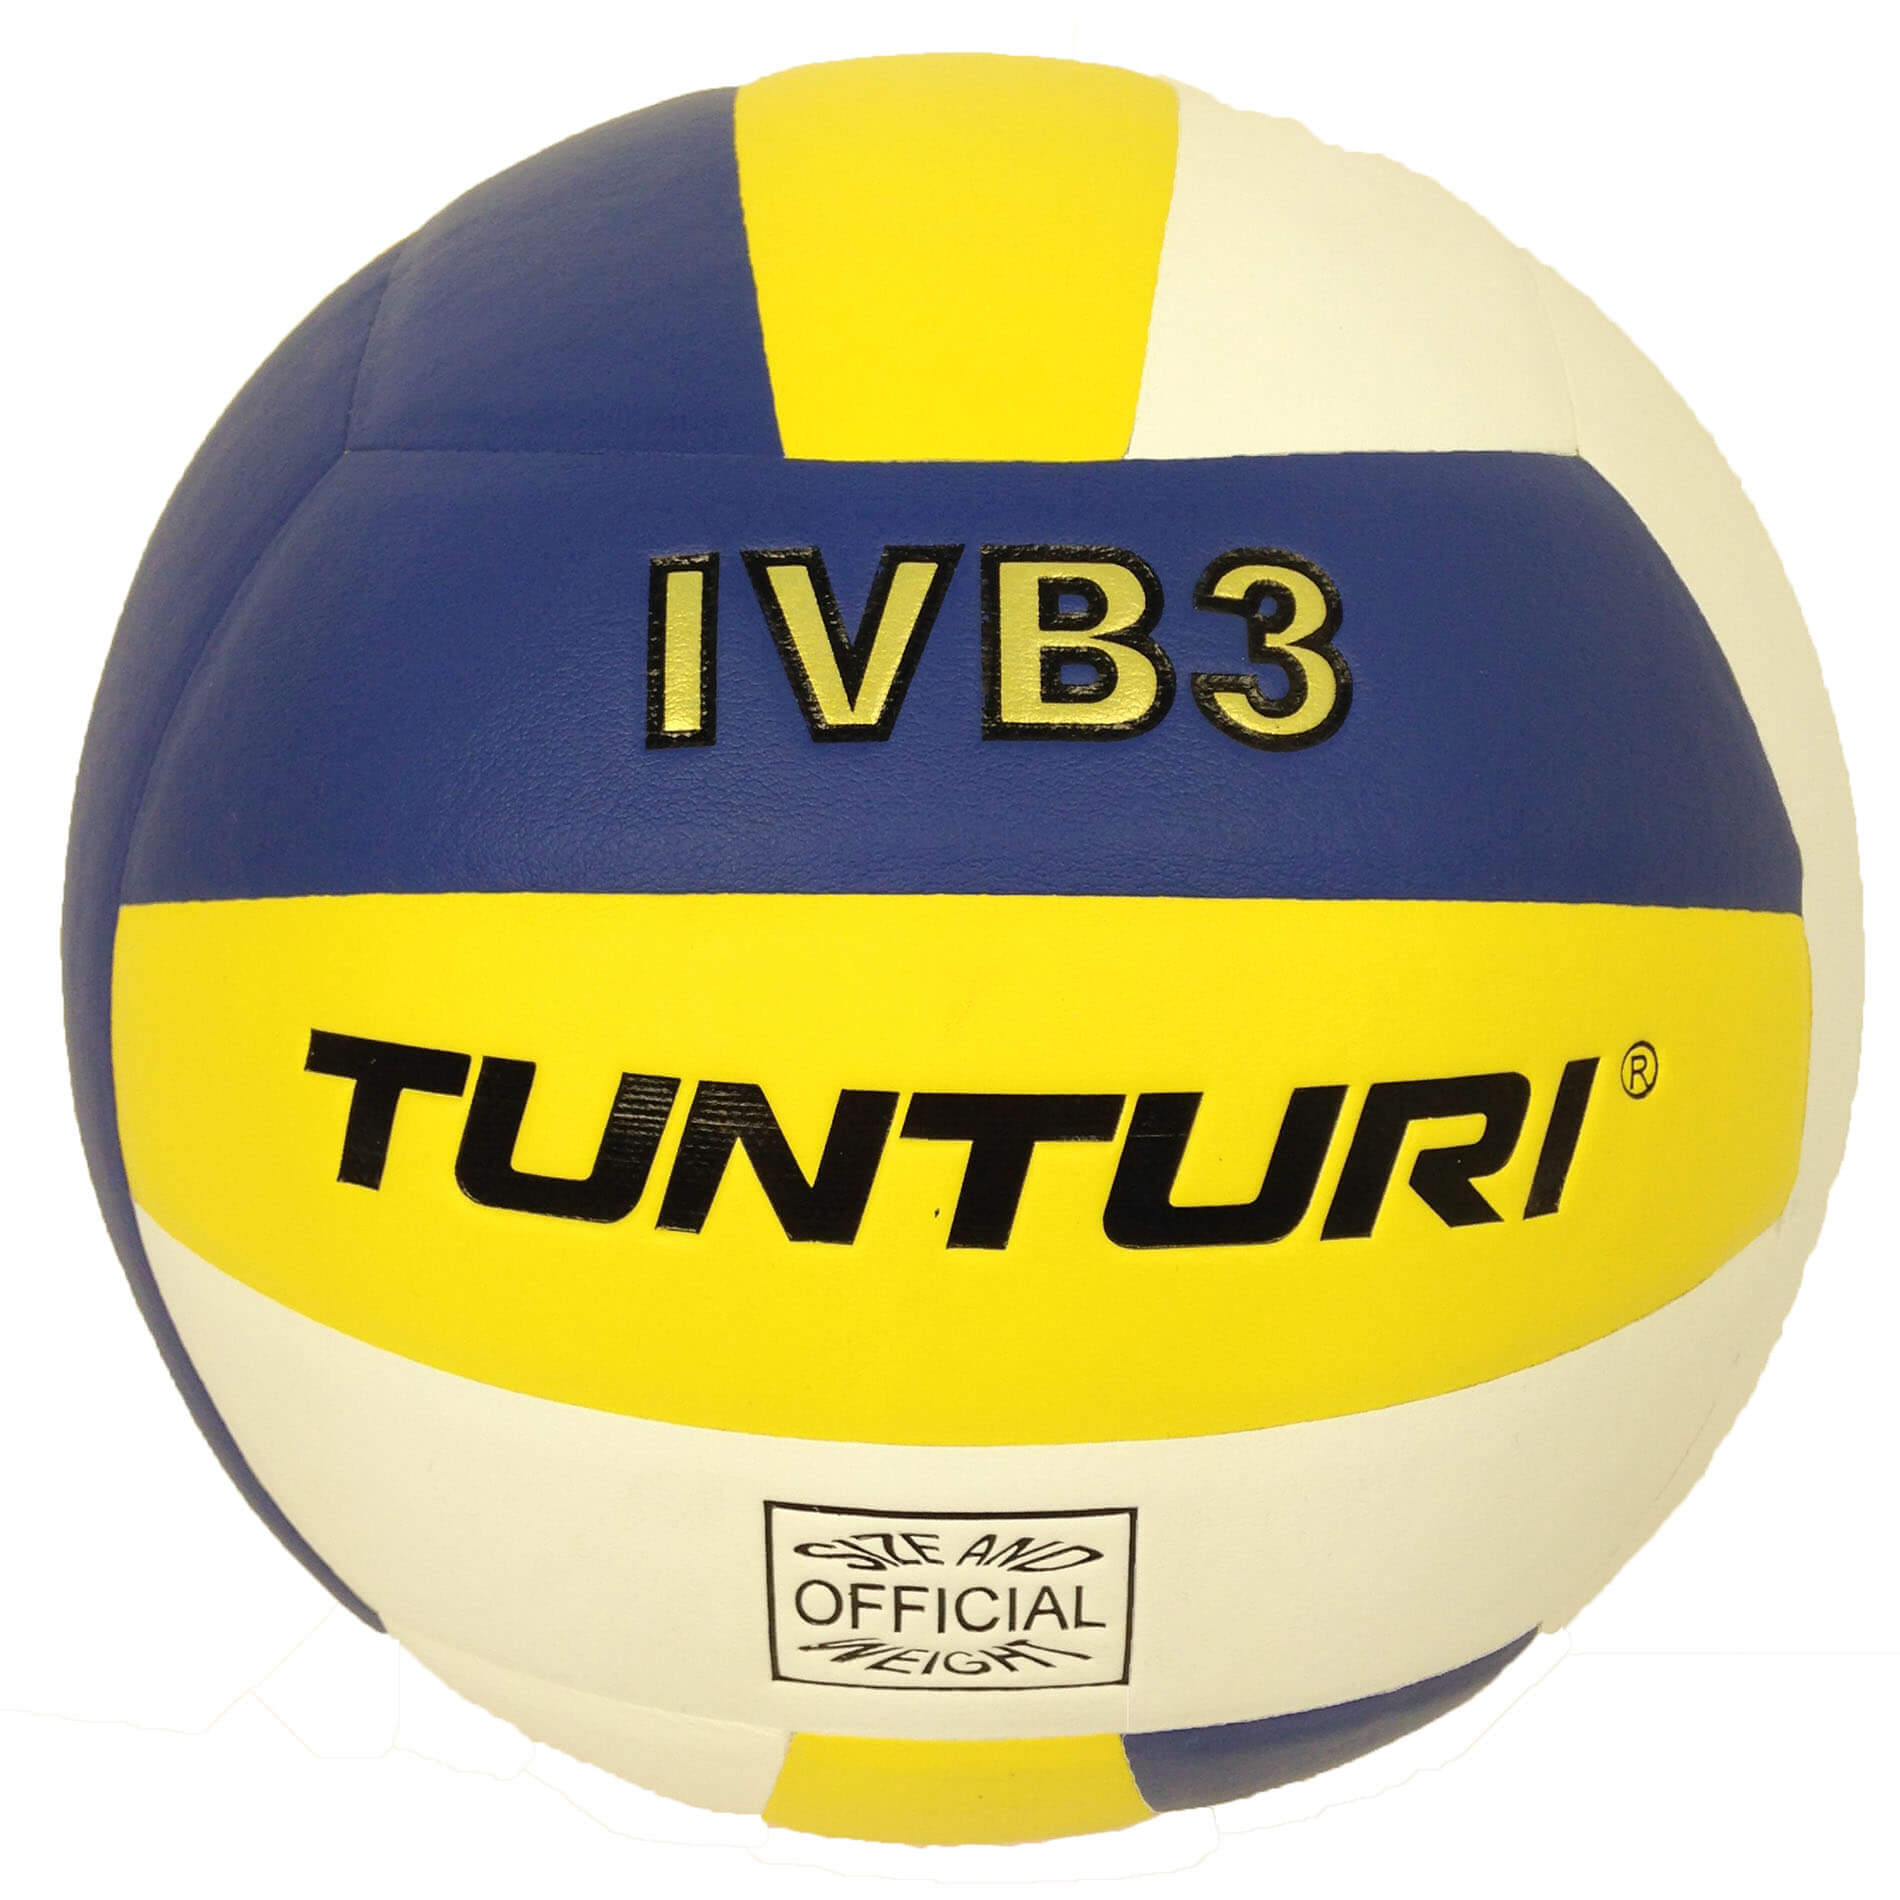 Volleybal bal - IVB3